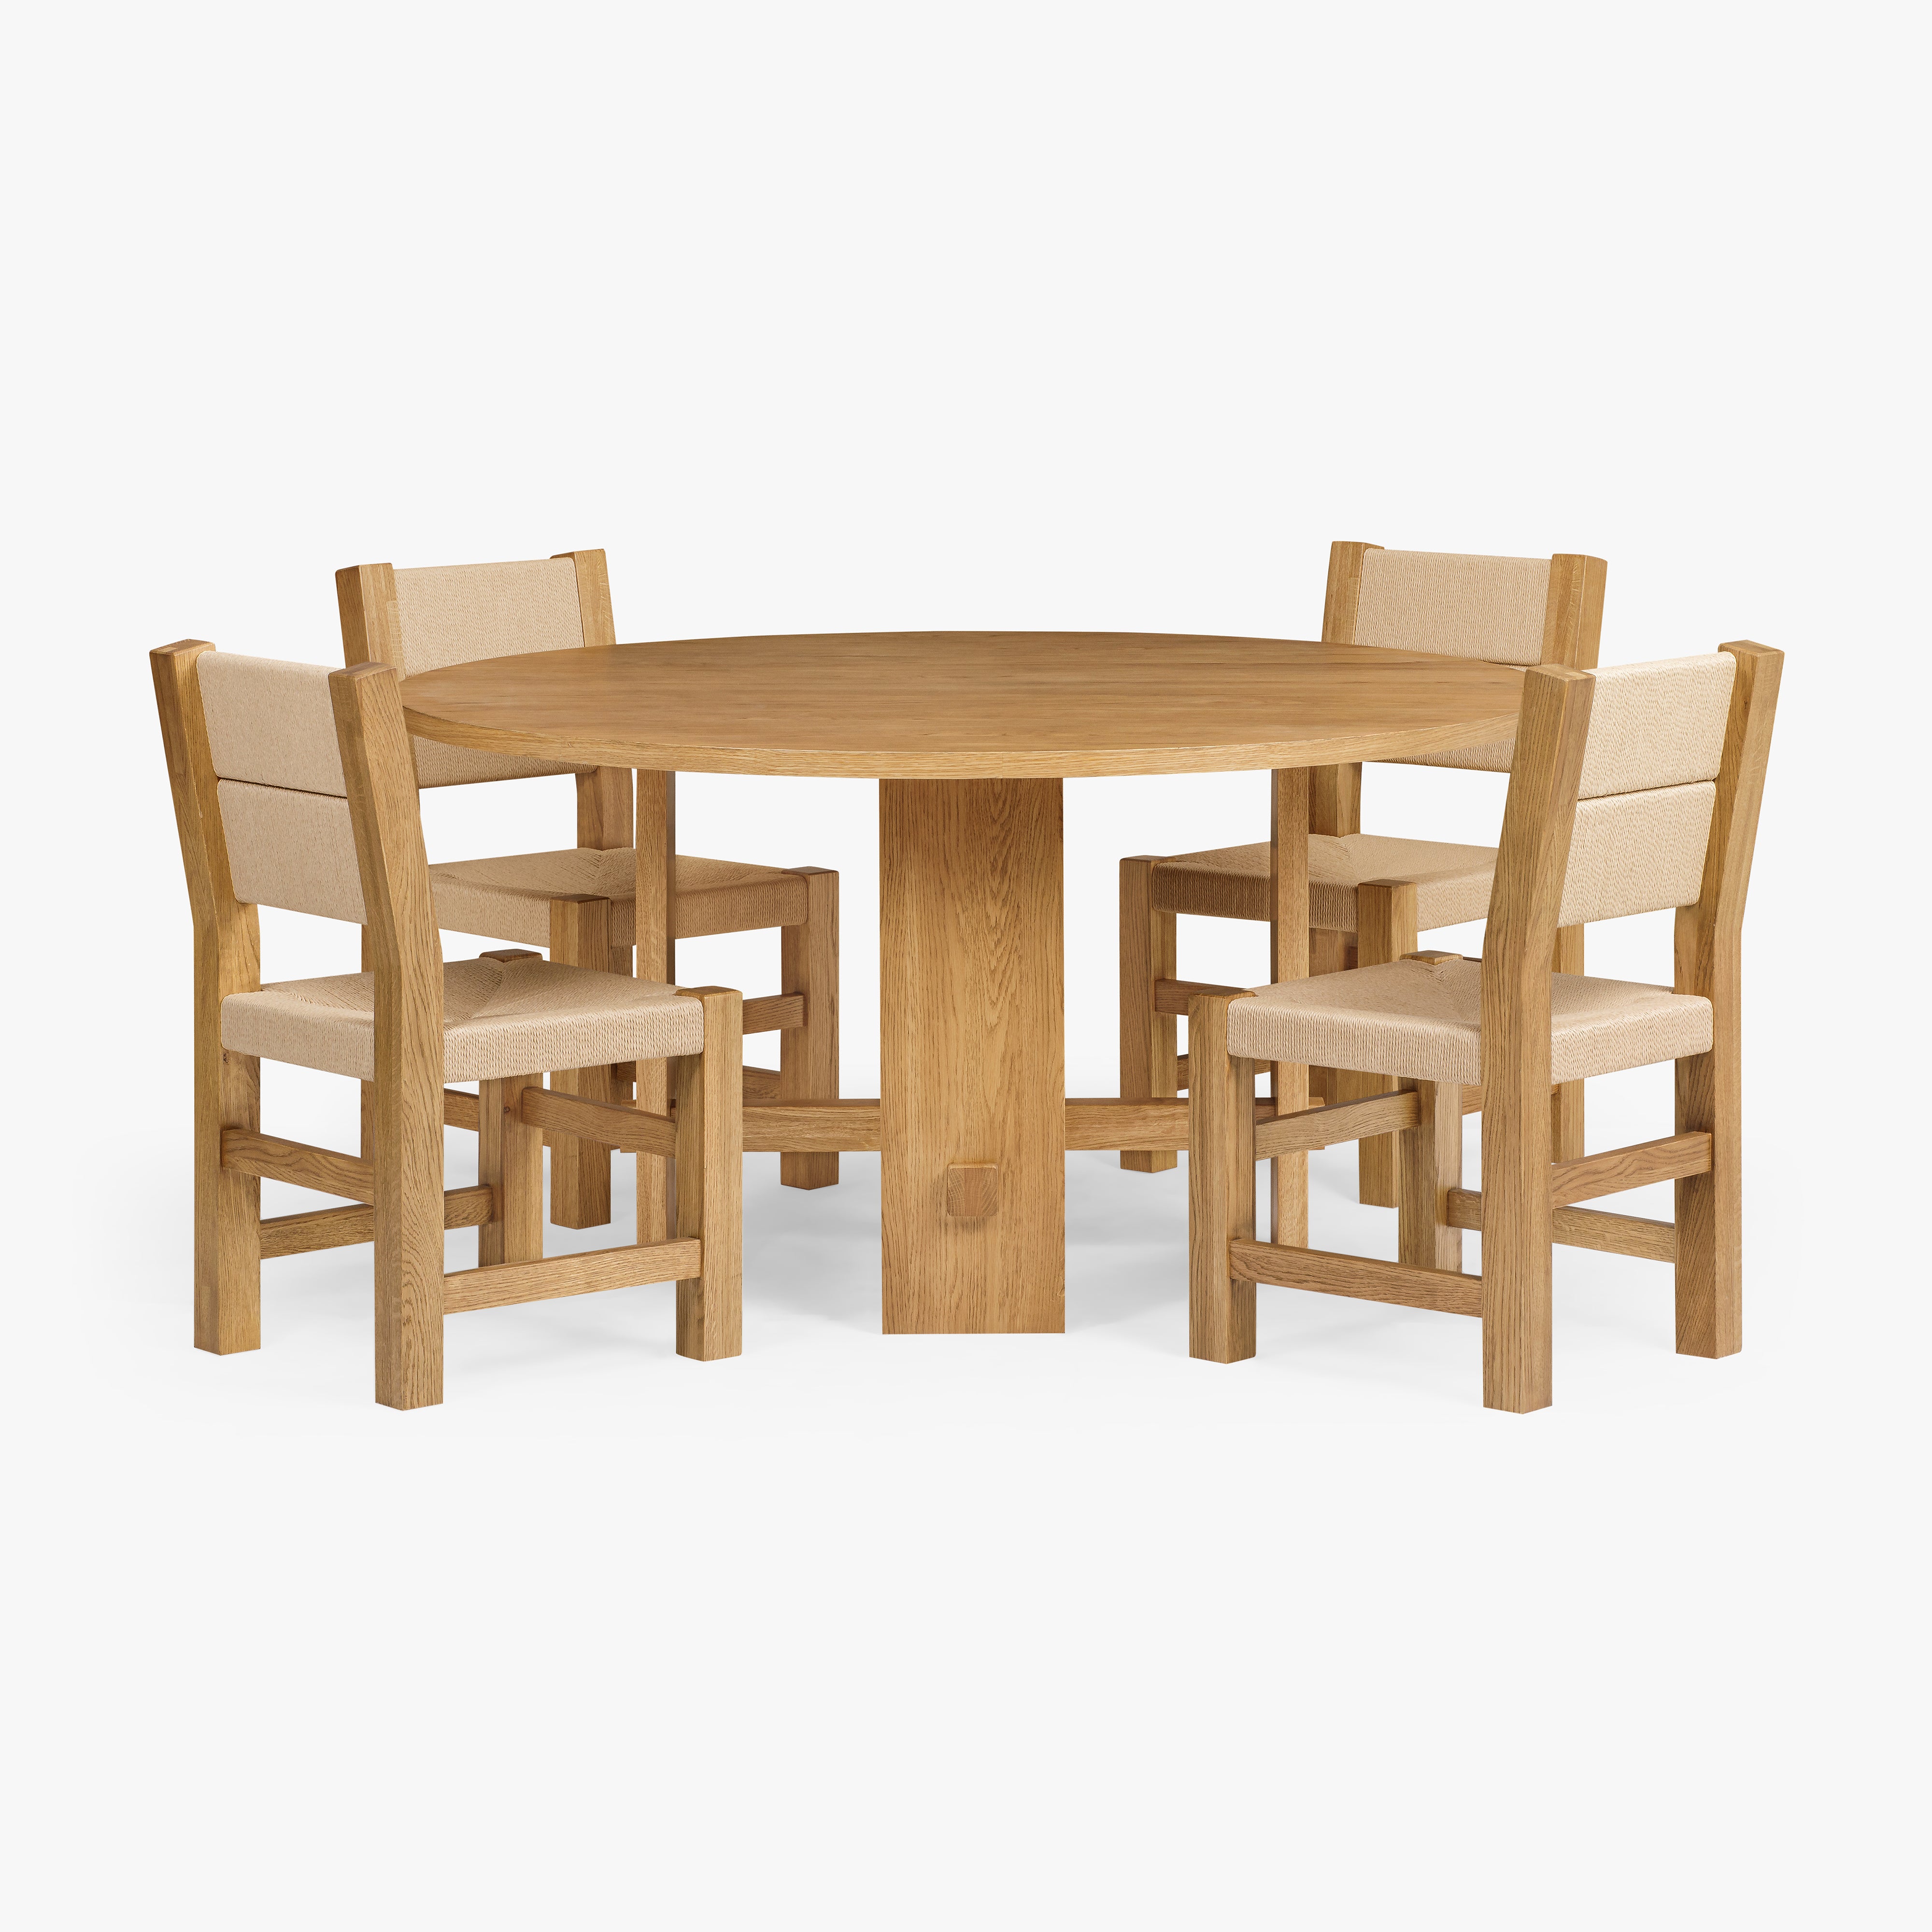 Saguaro Round Oak Dining Table